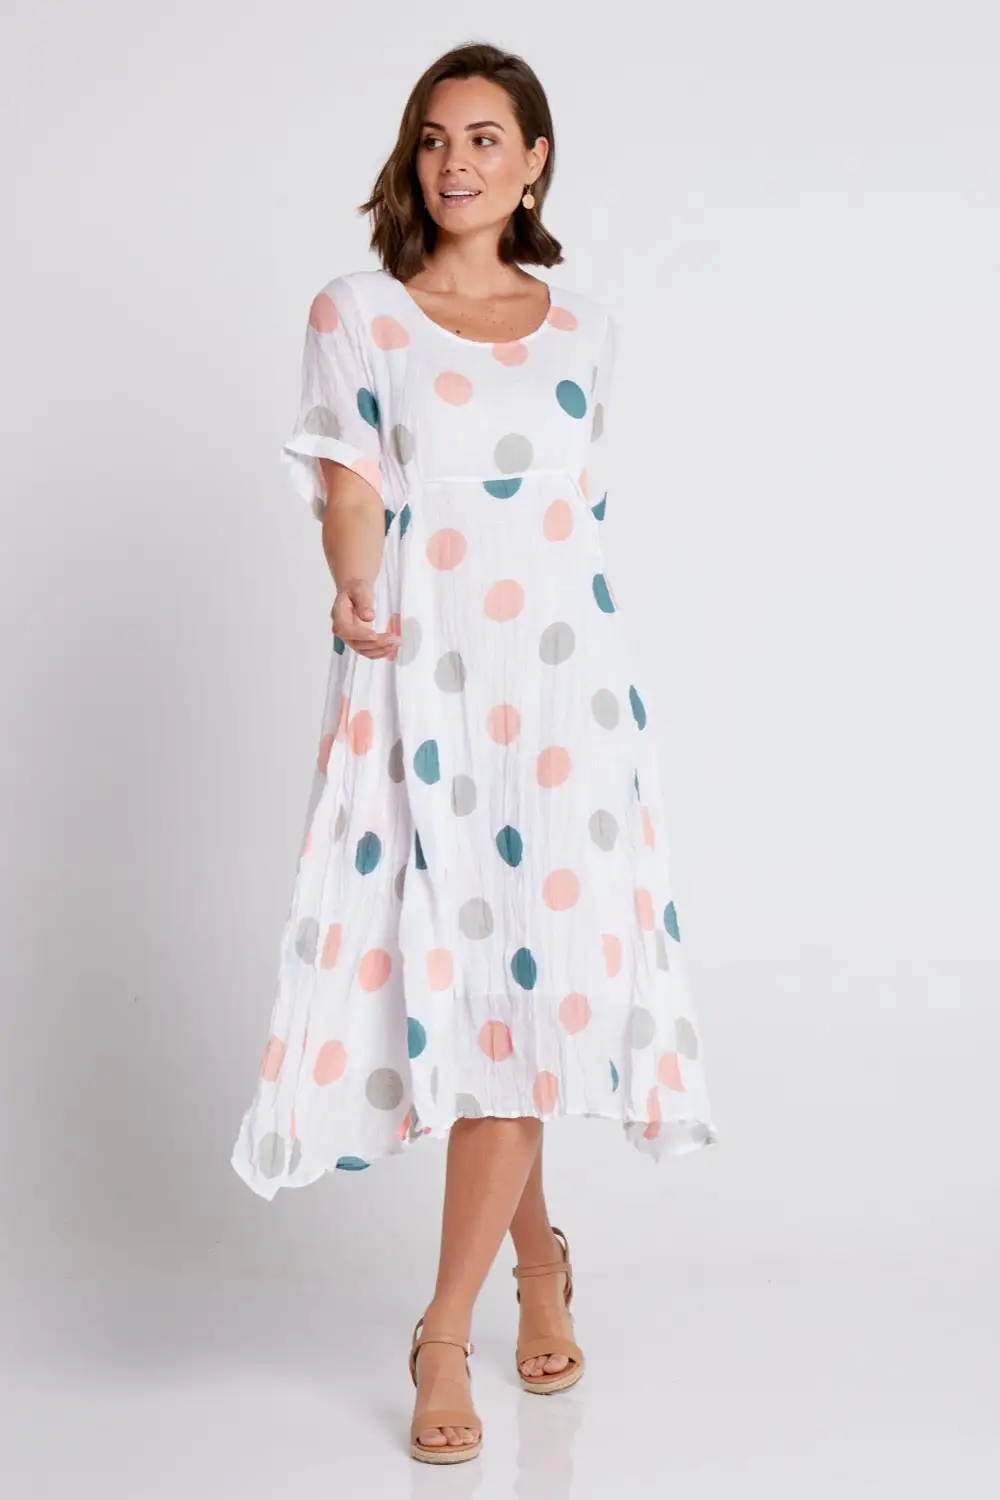 Waterhouse Dress - White/Peach Teal Spot